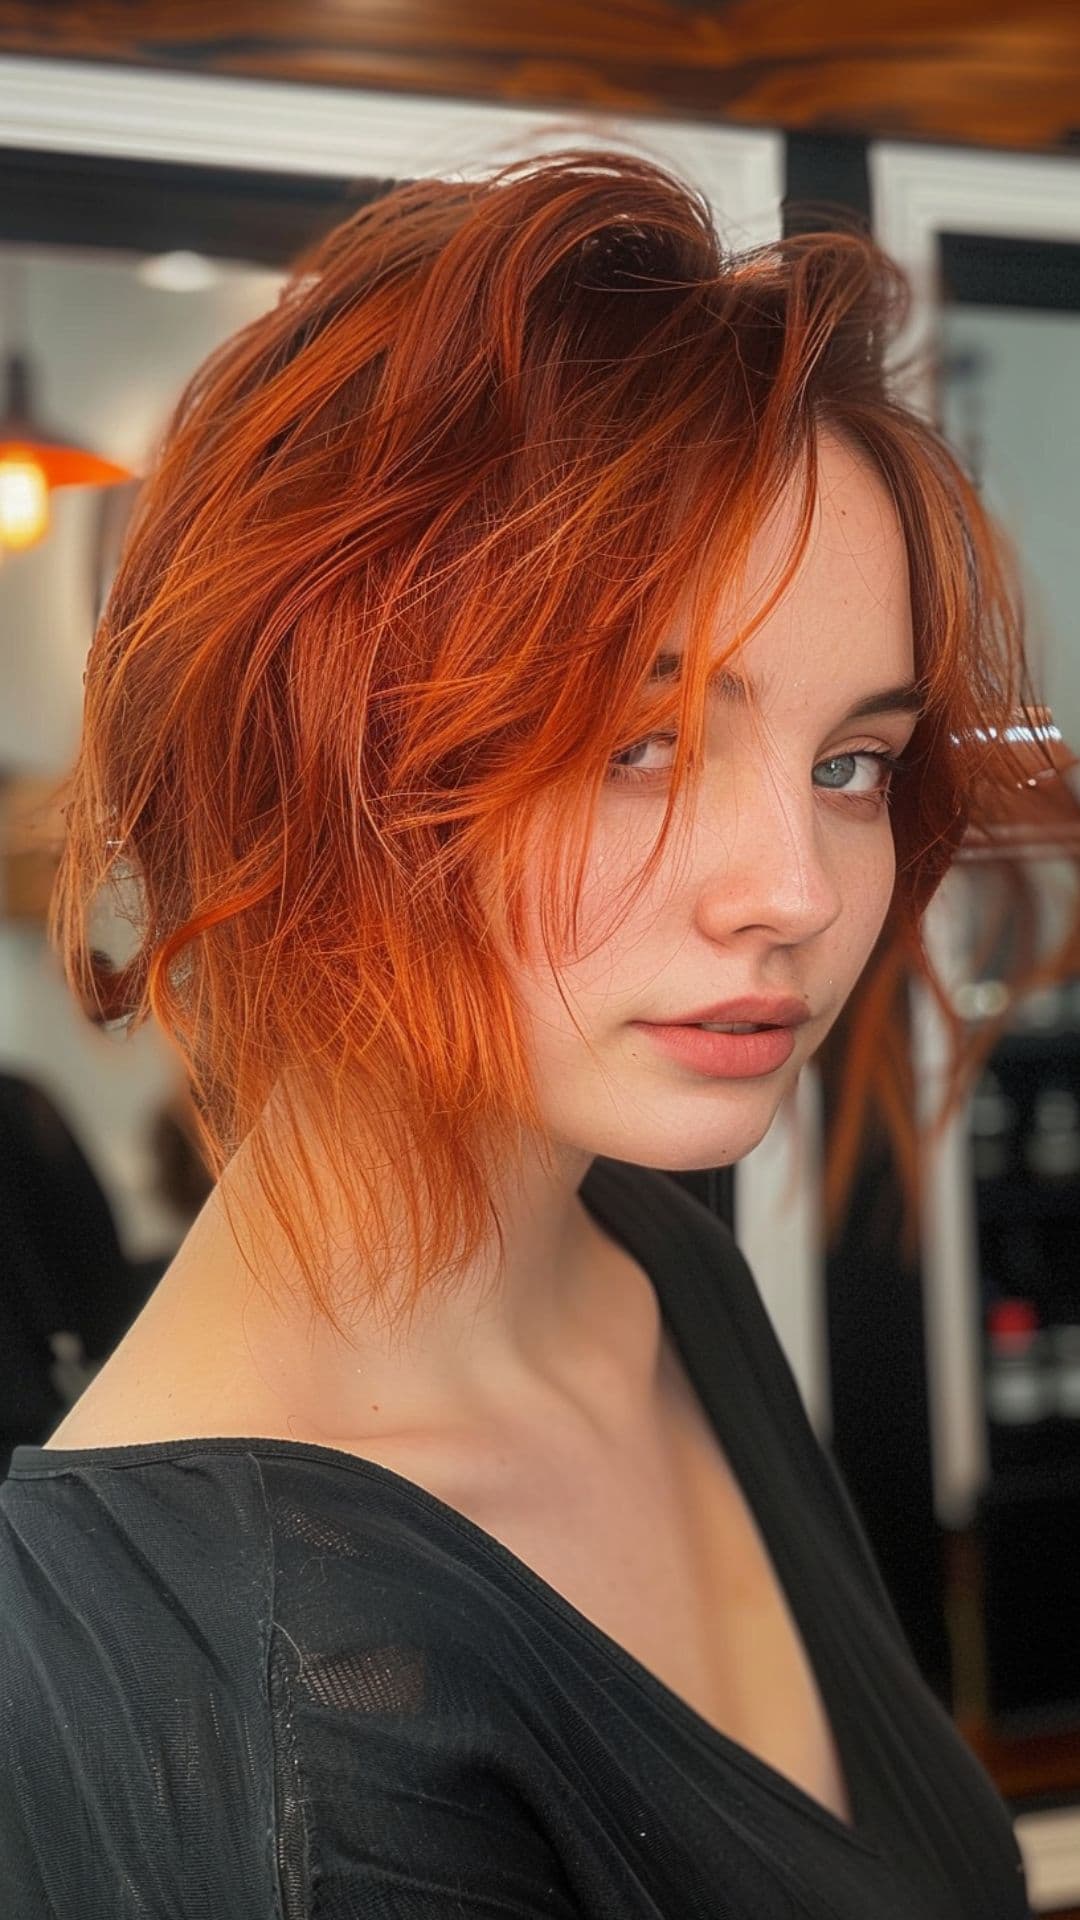 A woman modelling a short fiery red hair.